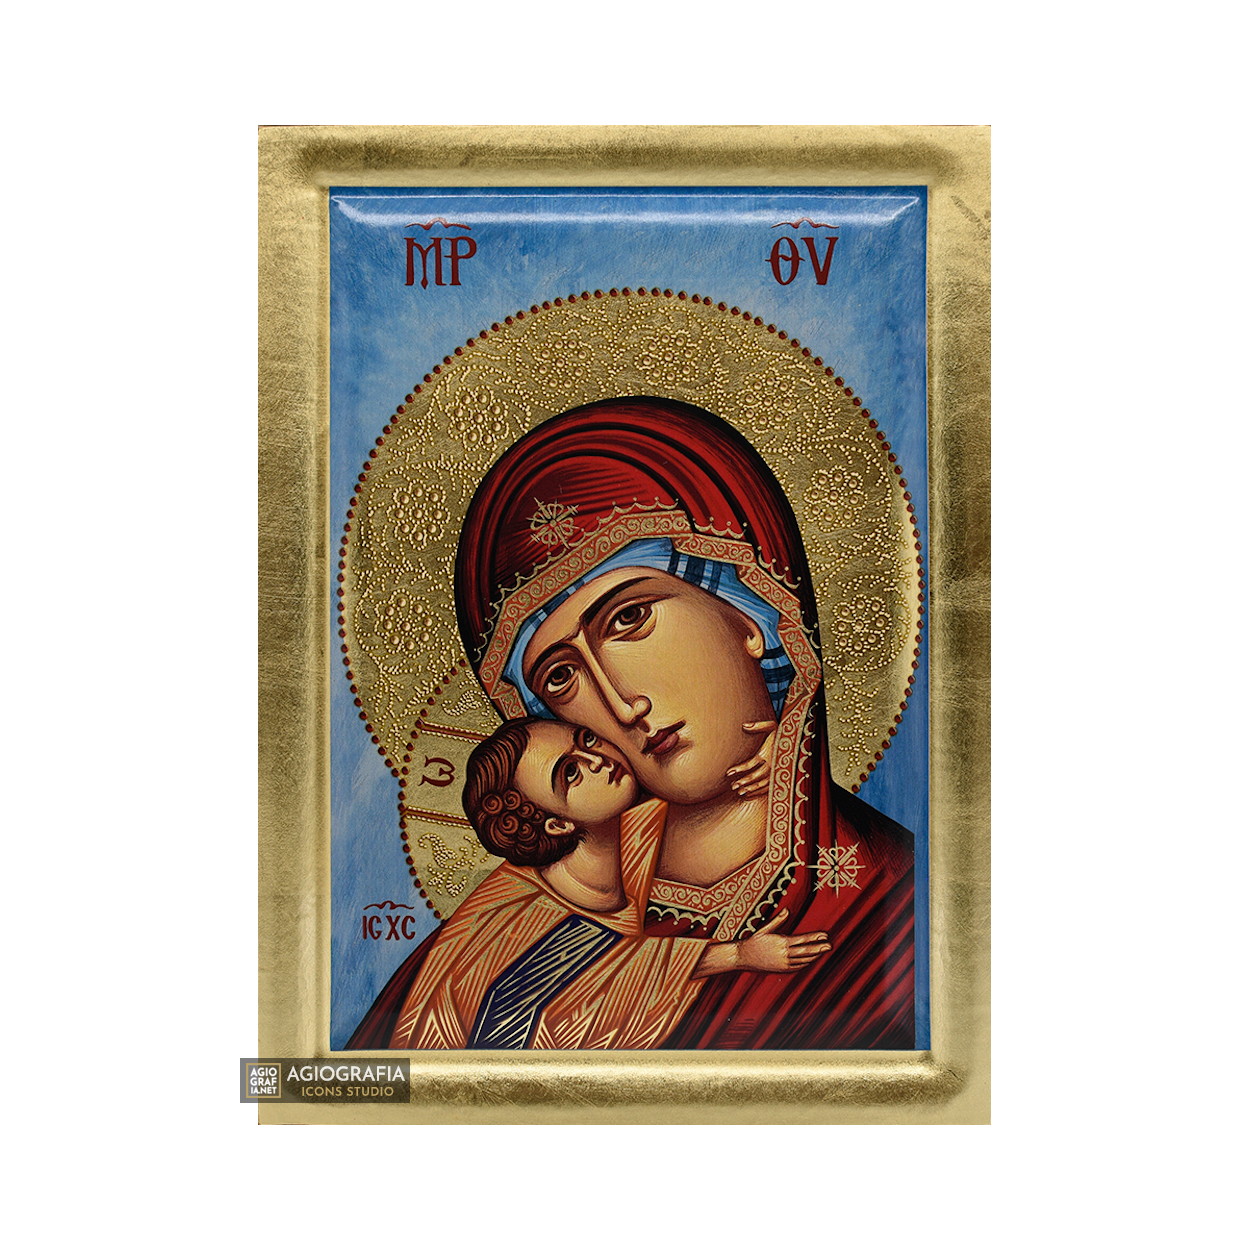 Virgin Mary of Vladimir Byzantine Orthodox Wood Icon with Gold Leaf